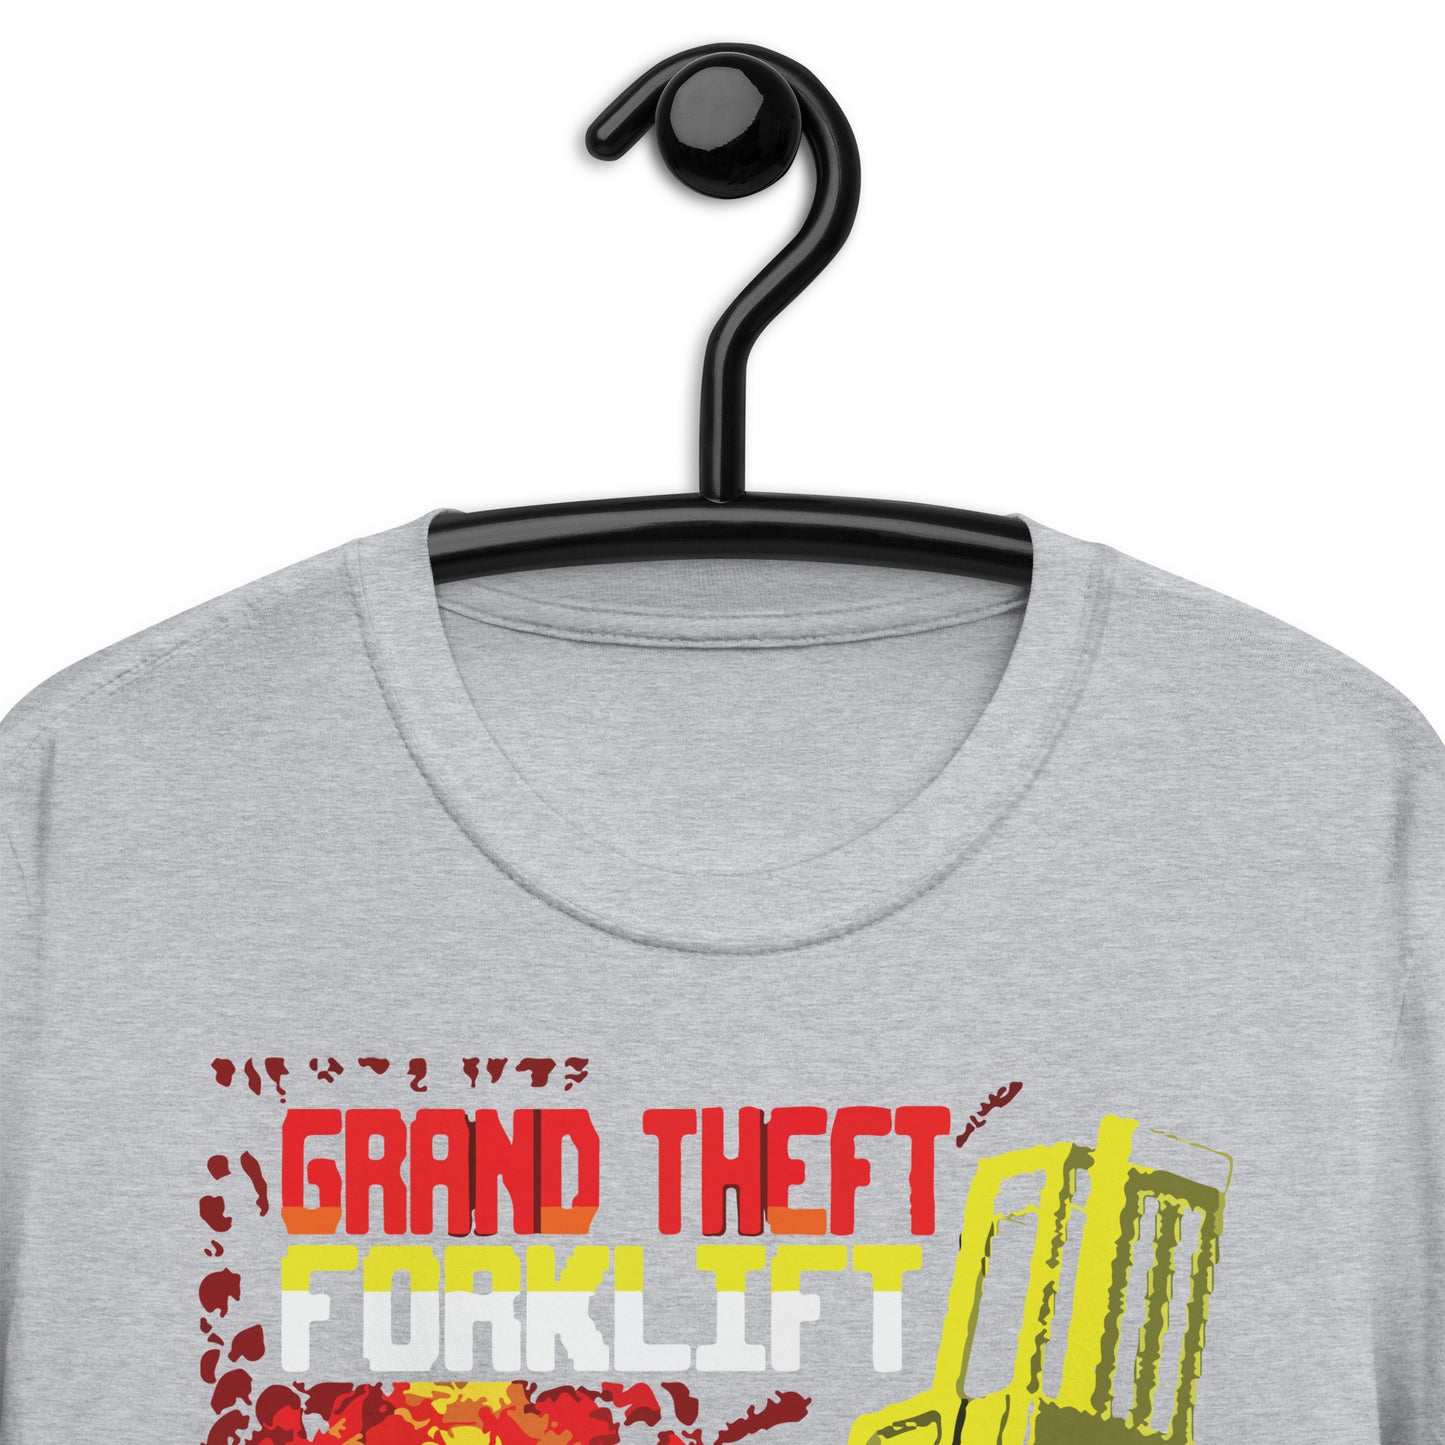 Grand Theft Forklift Short-Sleeve Unisex T-Shirt